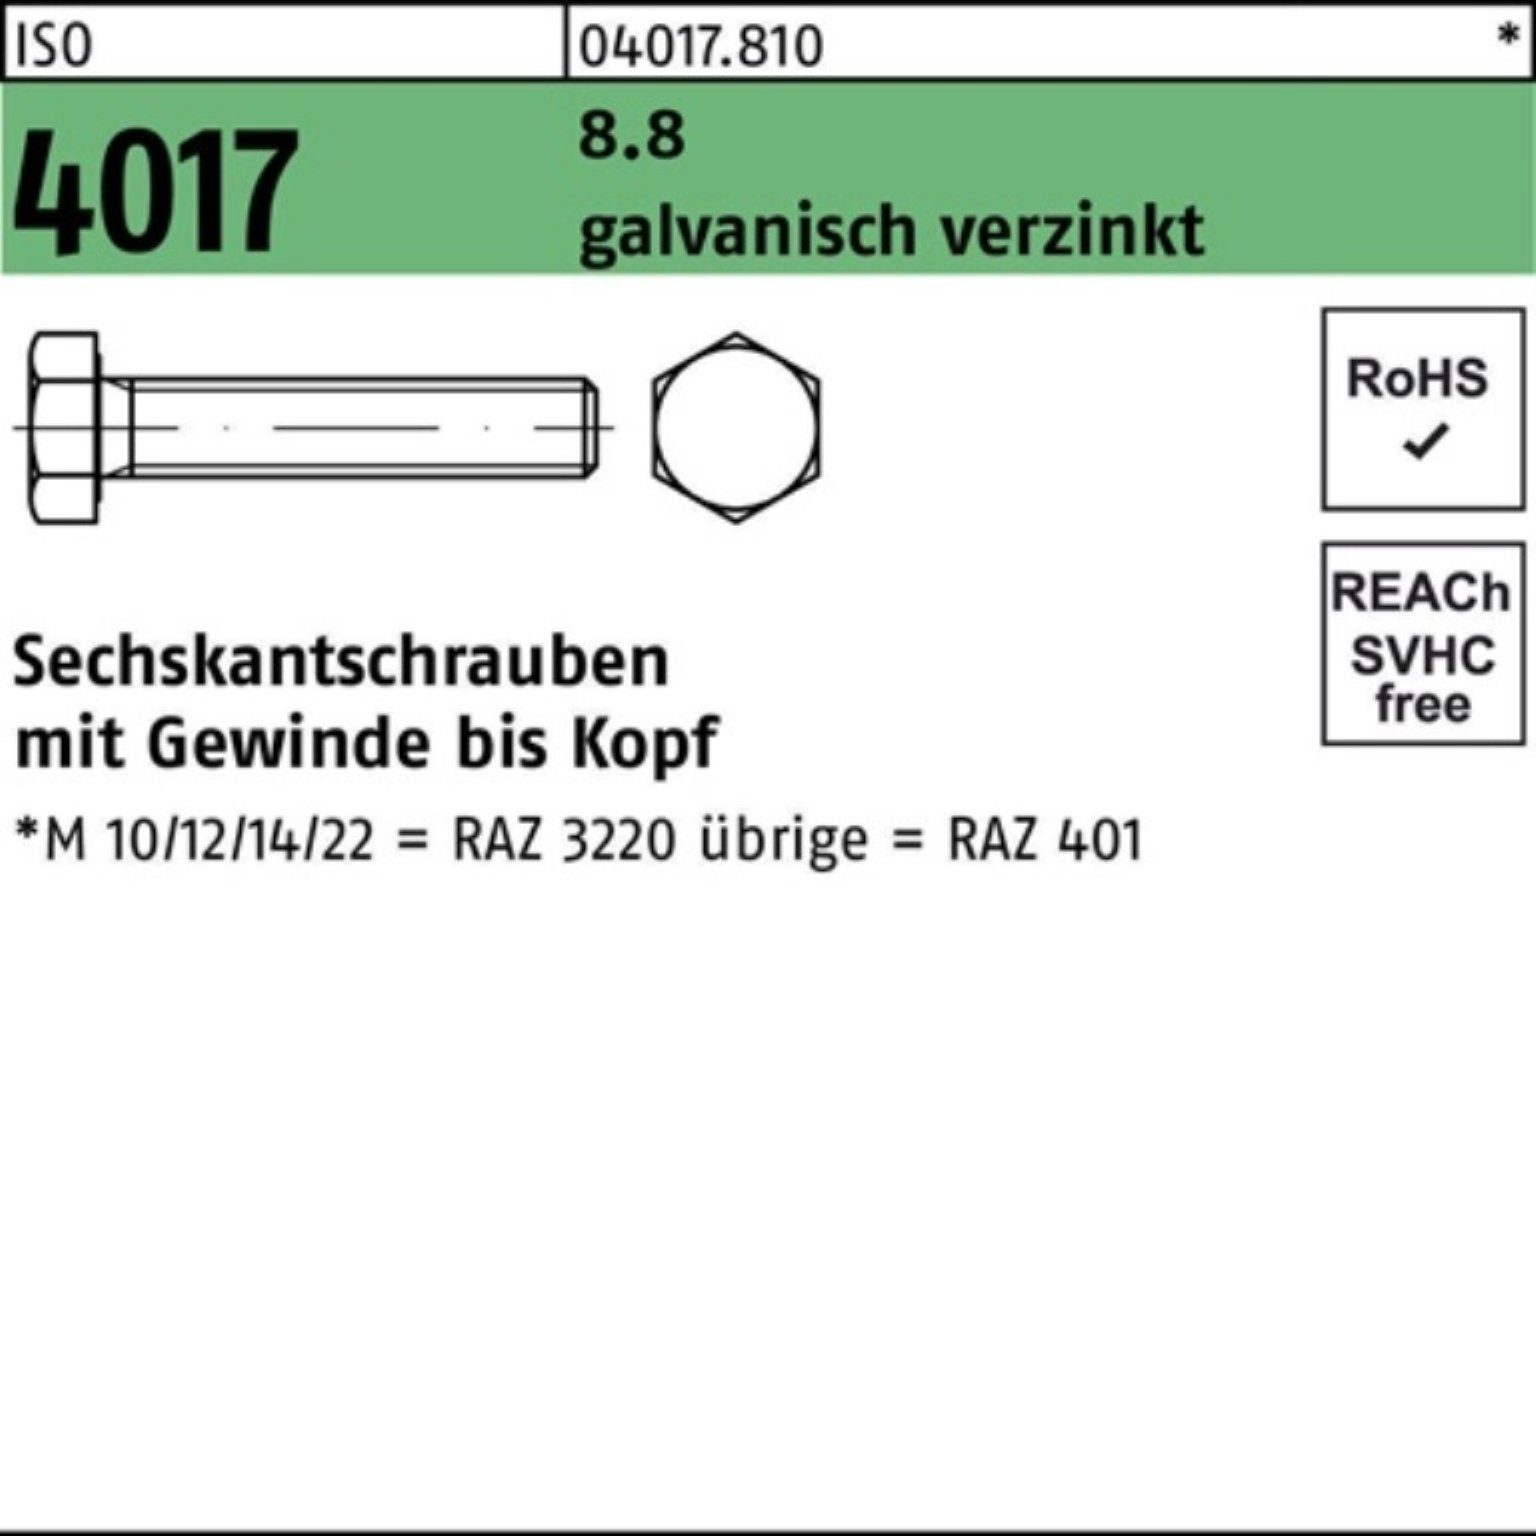 100er Sechskantschraube Bufab 4017 galv.verz. 100 Sechskantschraube Pack St 8.8 1 M30x ISO VG